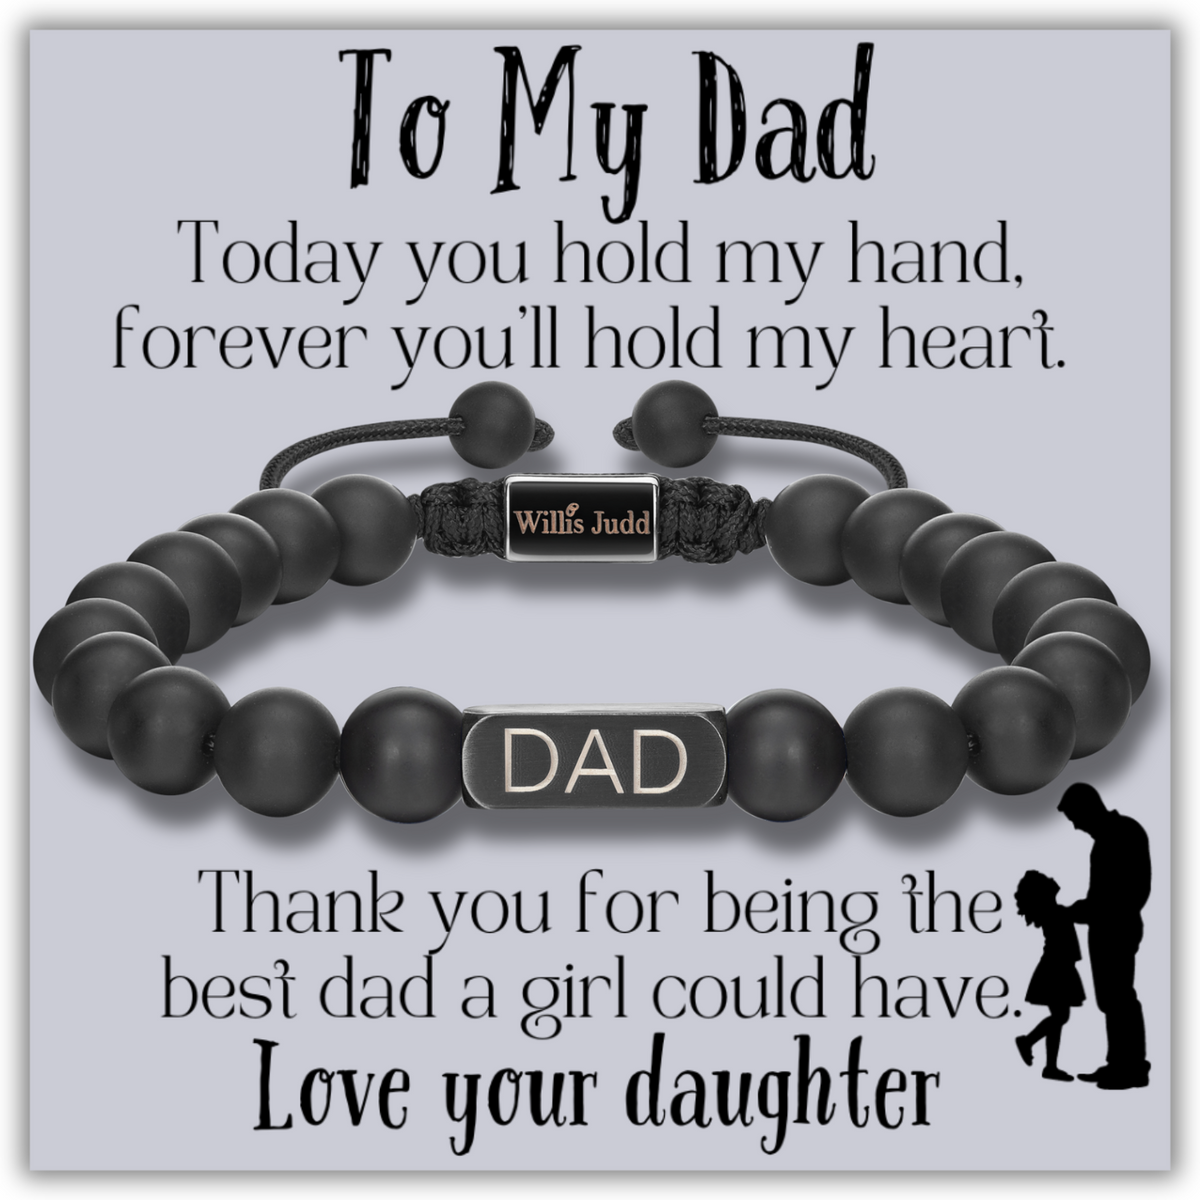 Dad Beaded Bracelet Black Onyx From Daughter